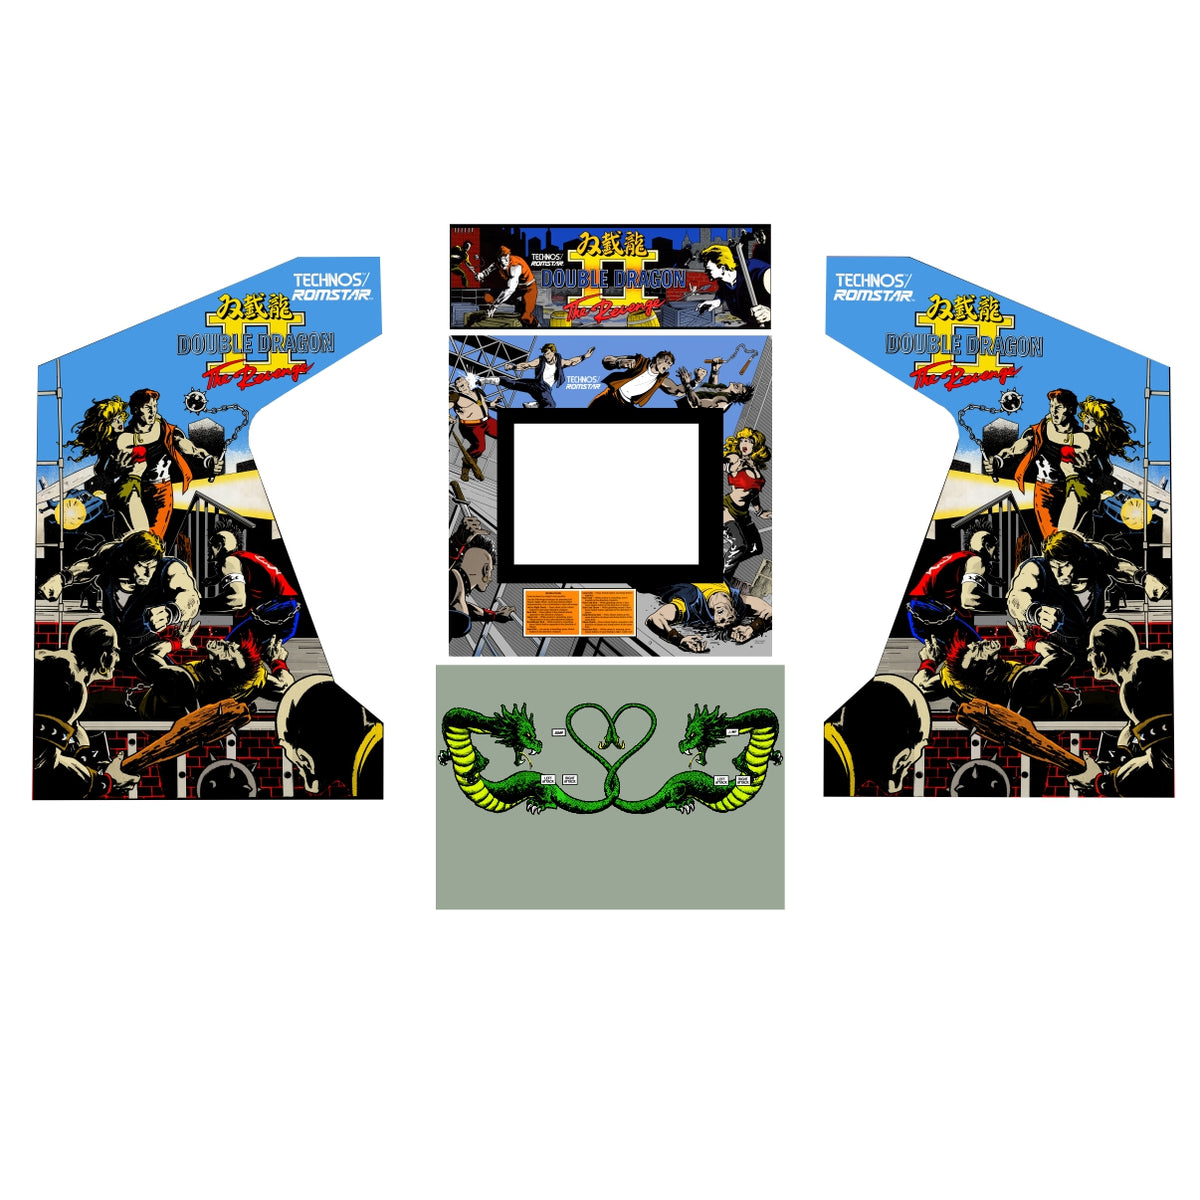 Double Dragon II Arcade Bezel – Escape Pod Online